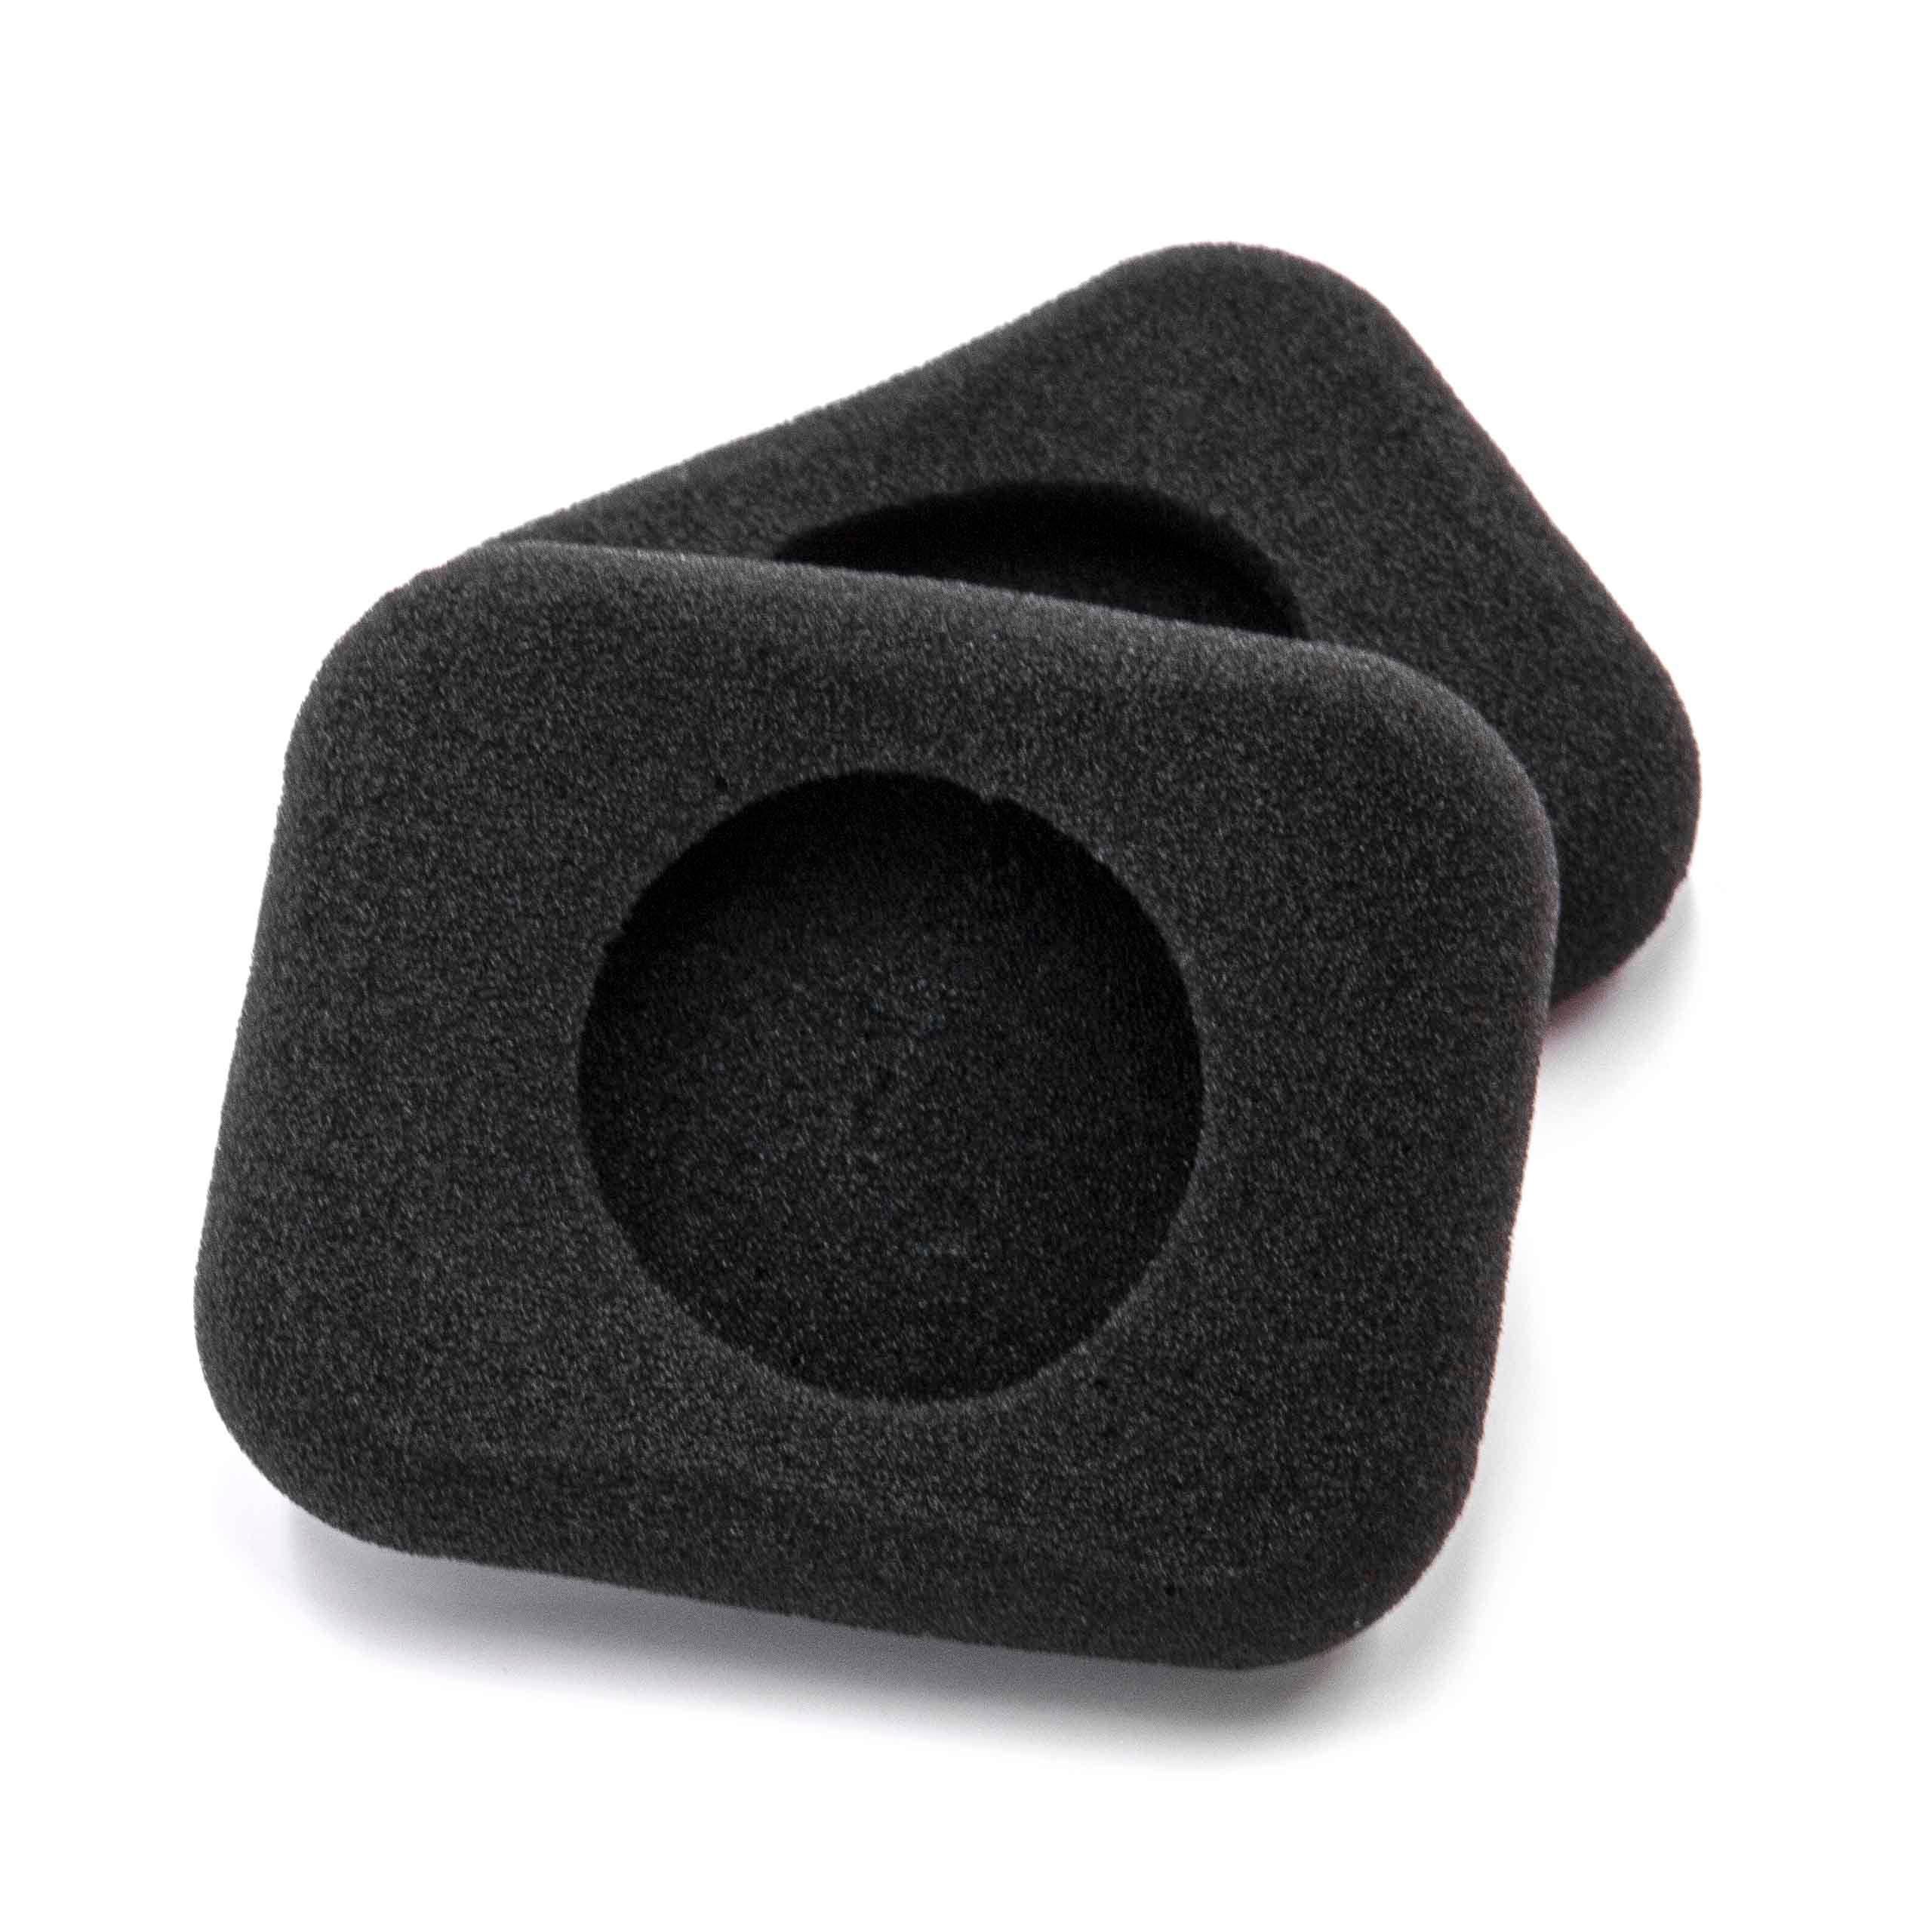 2x Ear Pads suitable for Bang & Olufsen Form Headphones etc. - foam